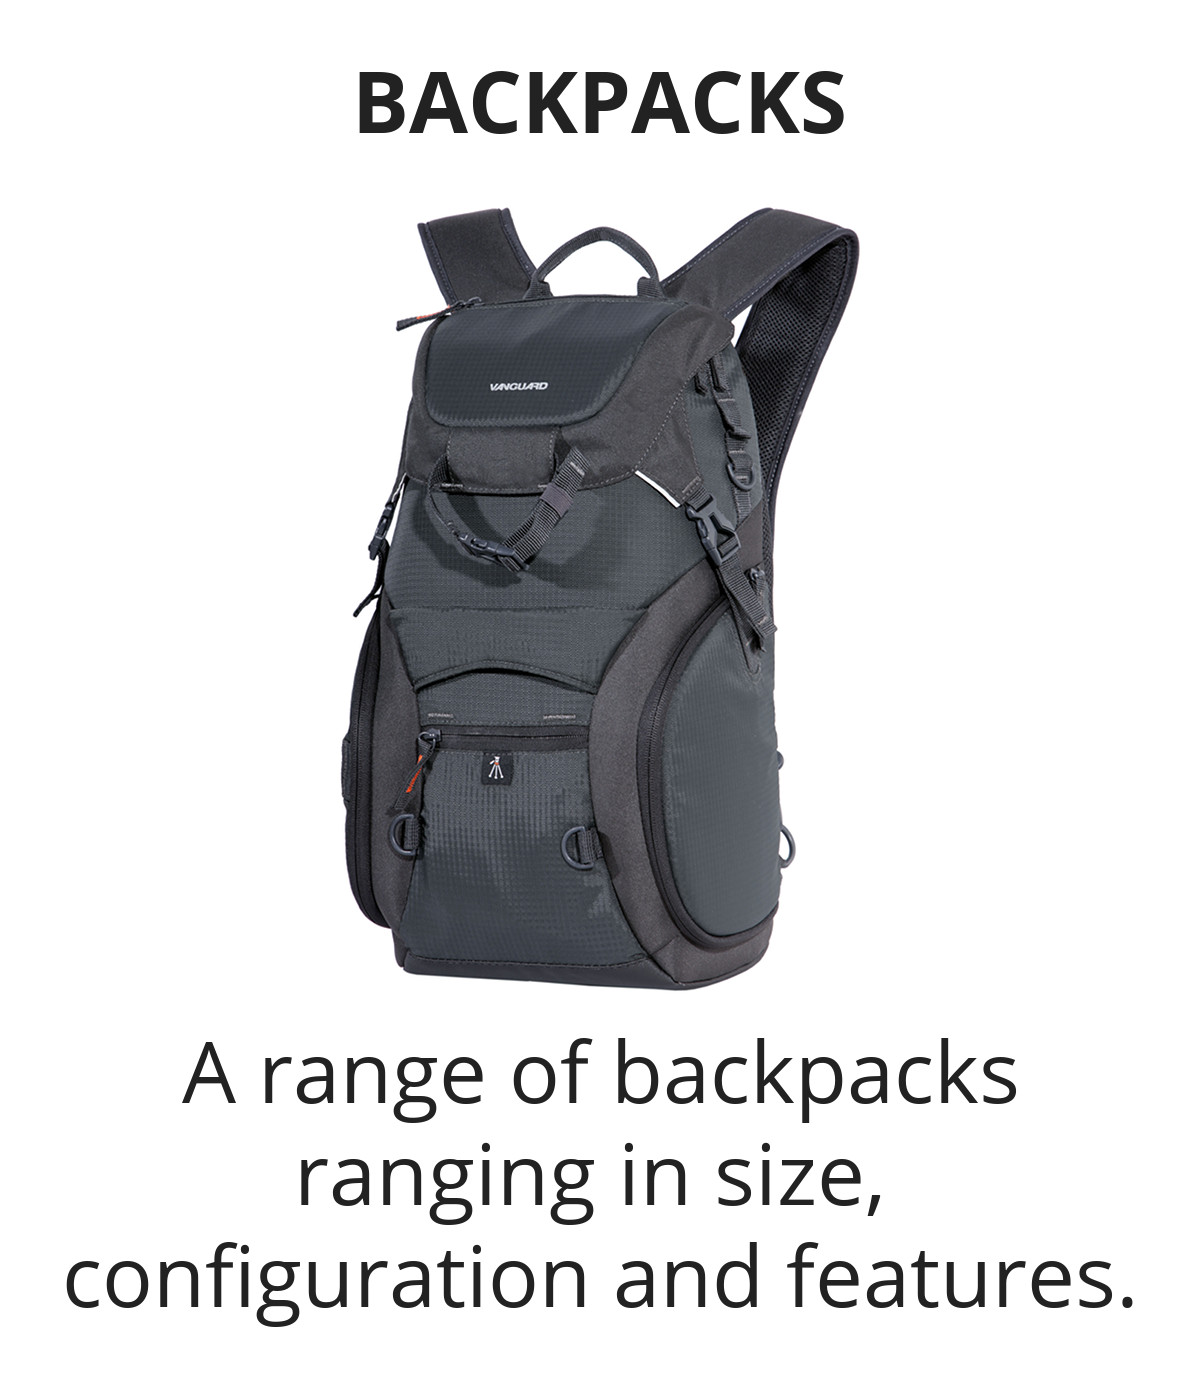 Vanguard camera accessories backpacks